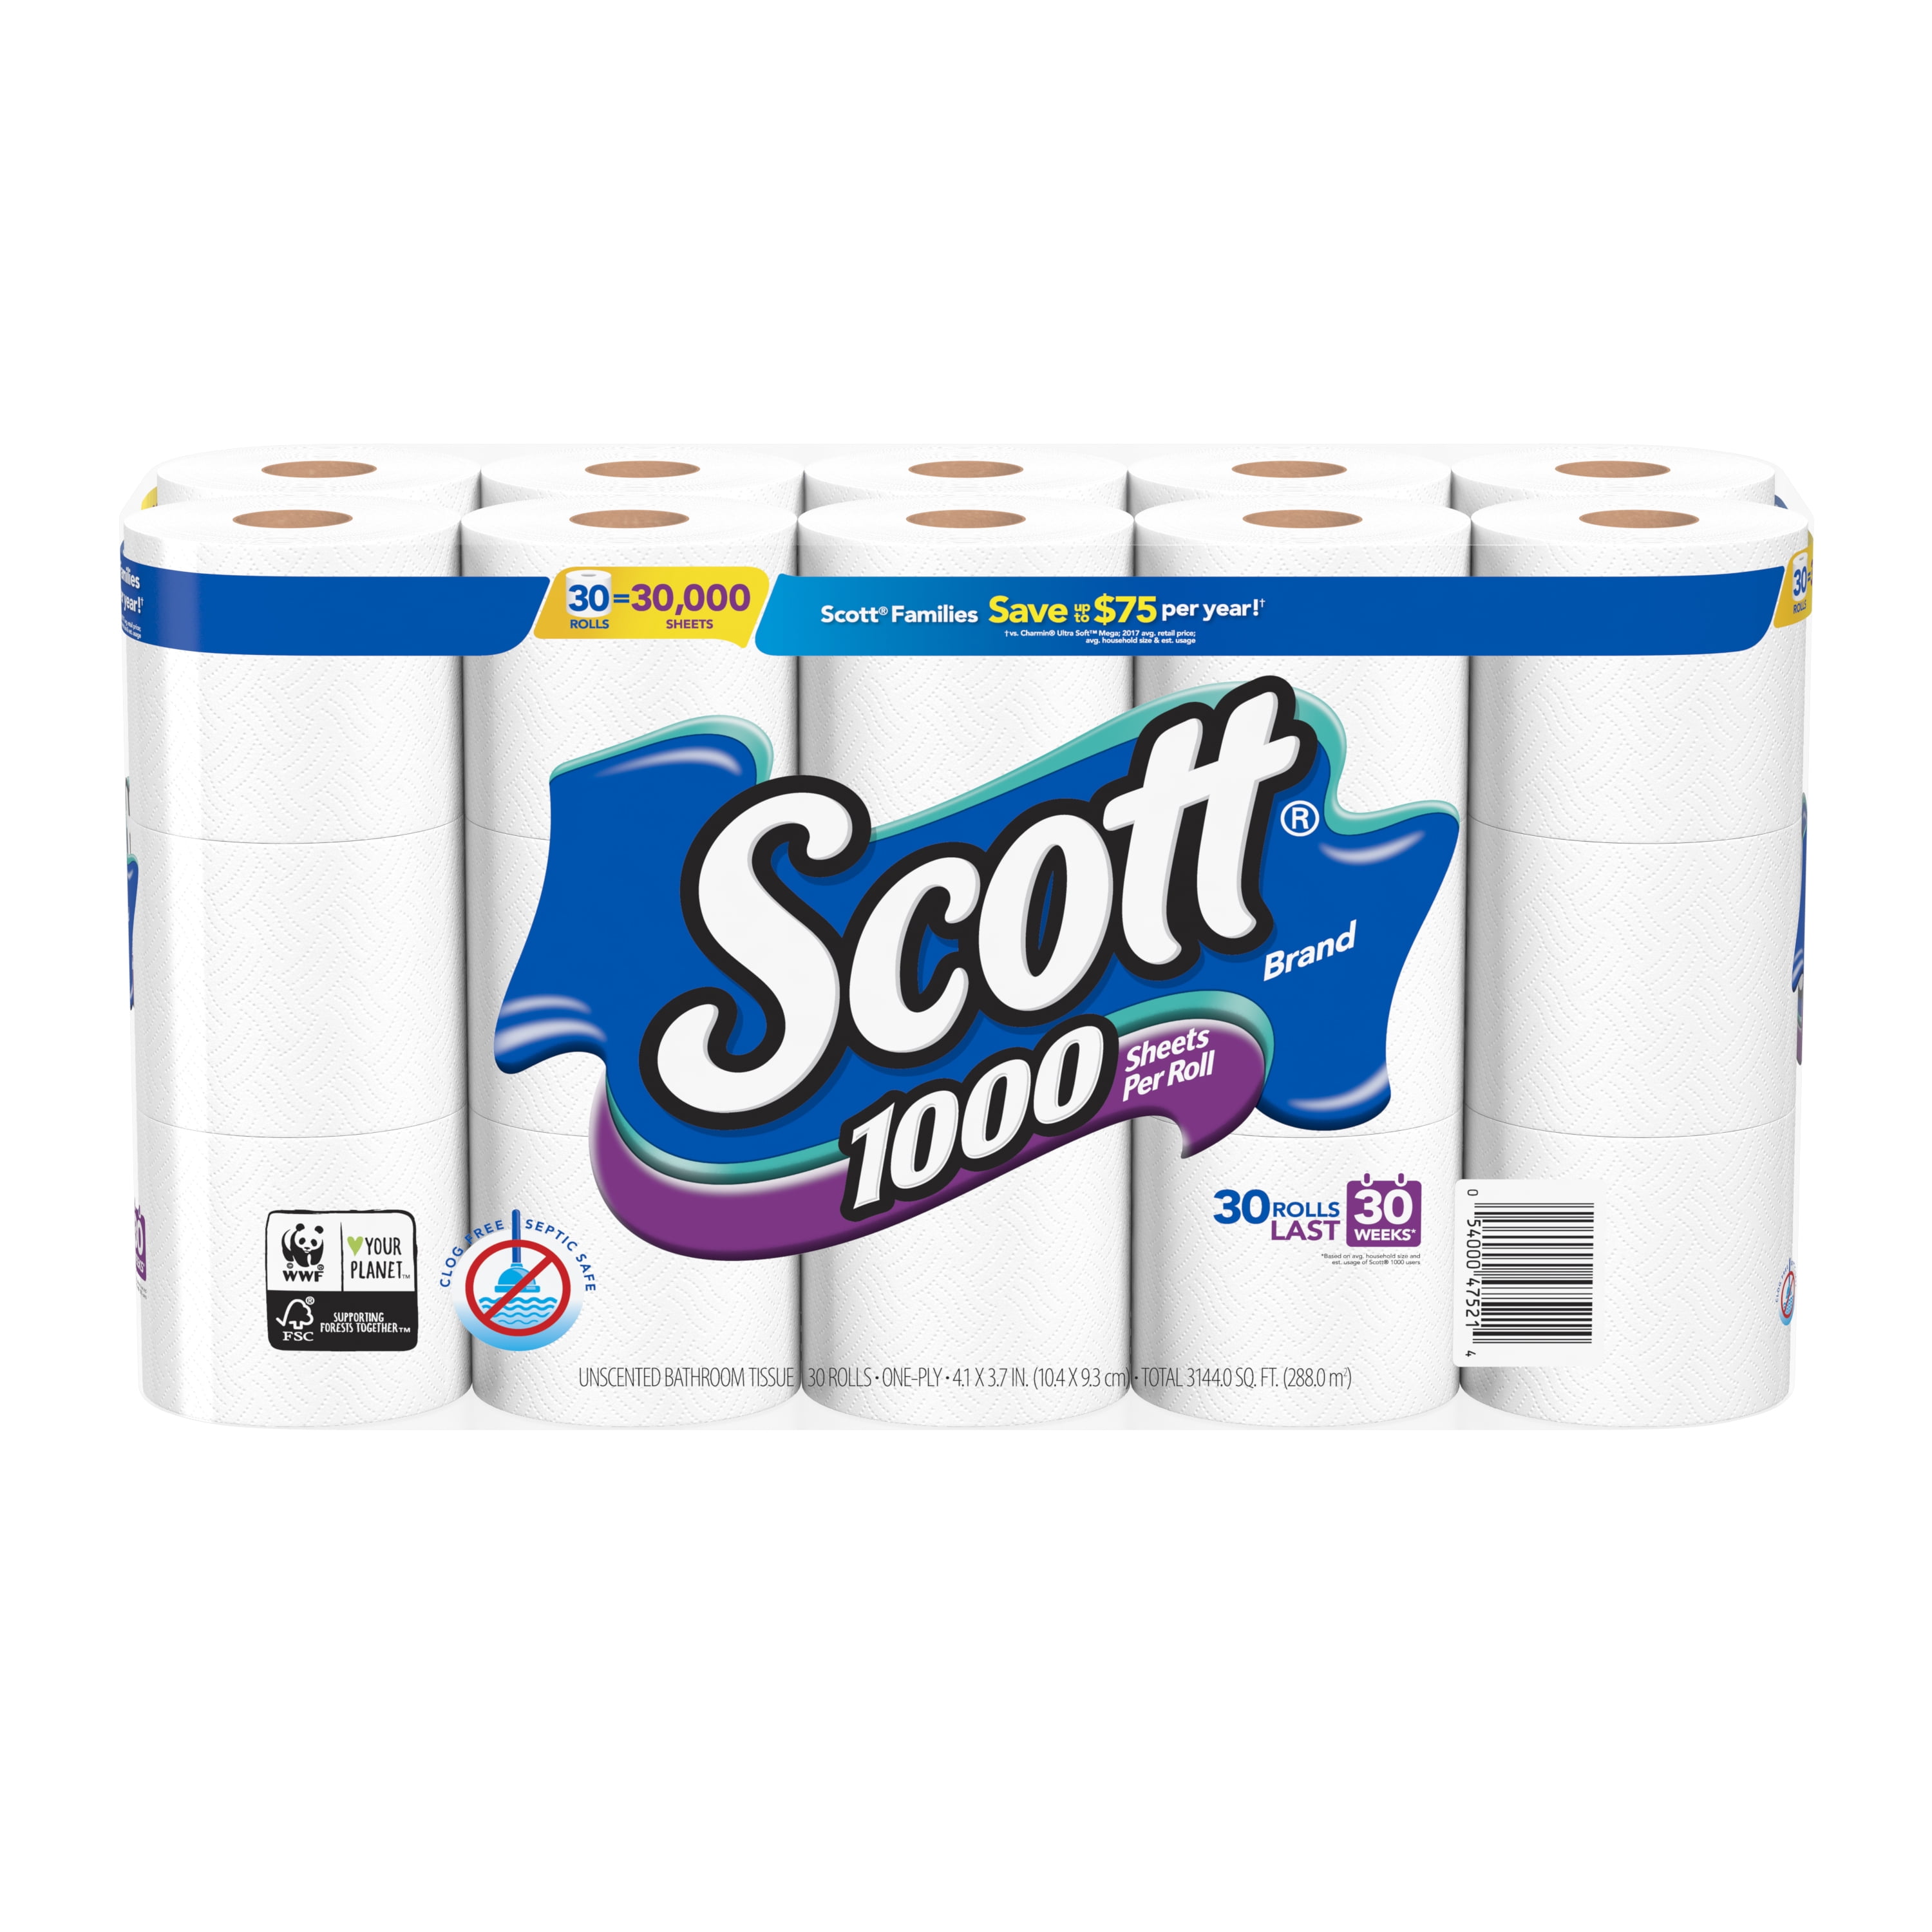 scott-1000-toilet-paper-30-rolls-30-000-sheets-walmart